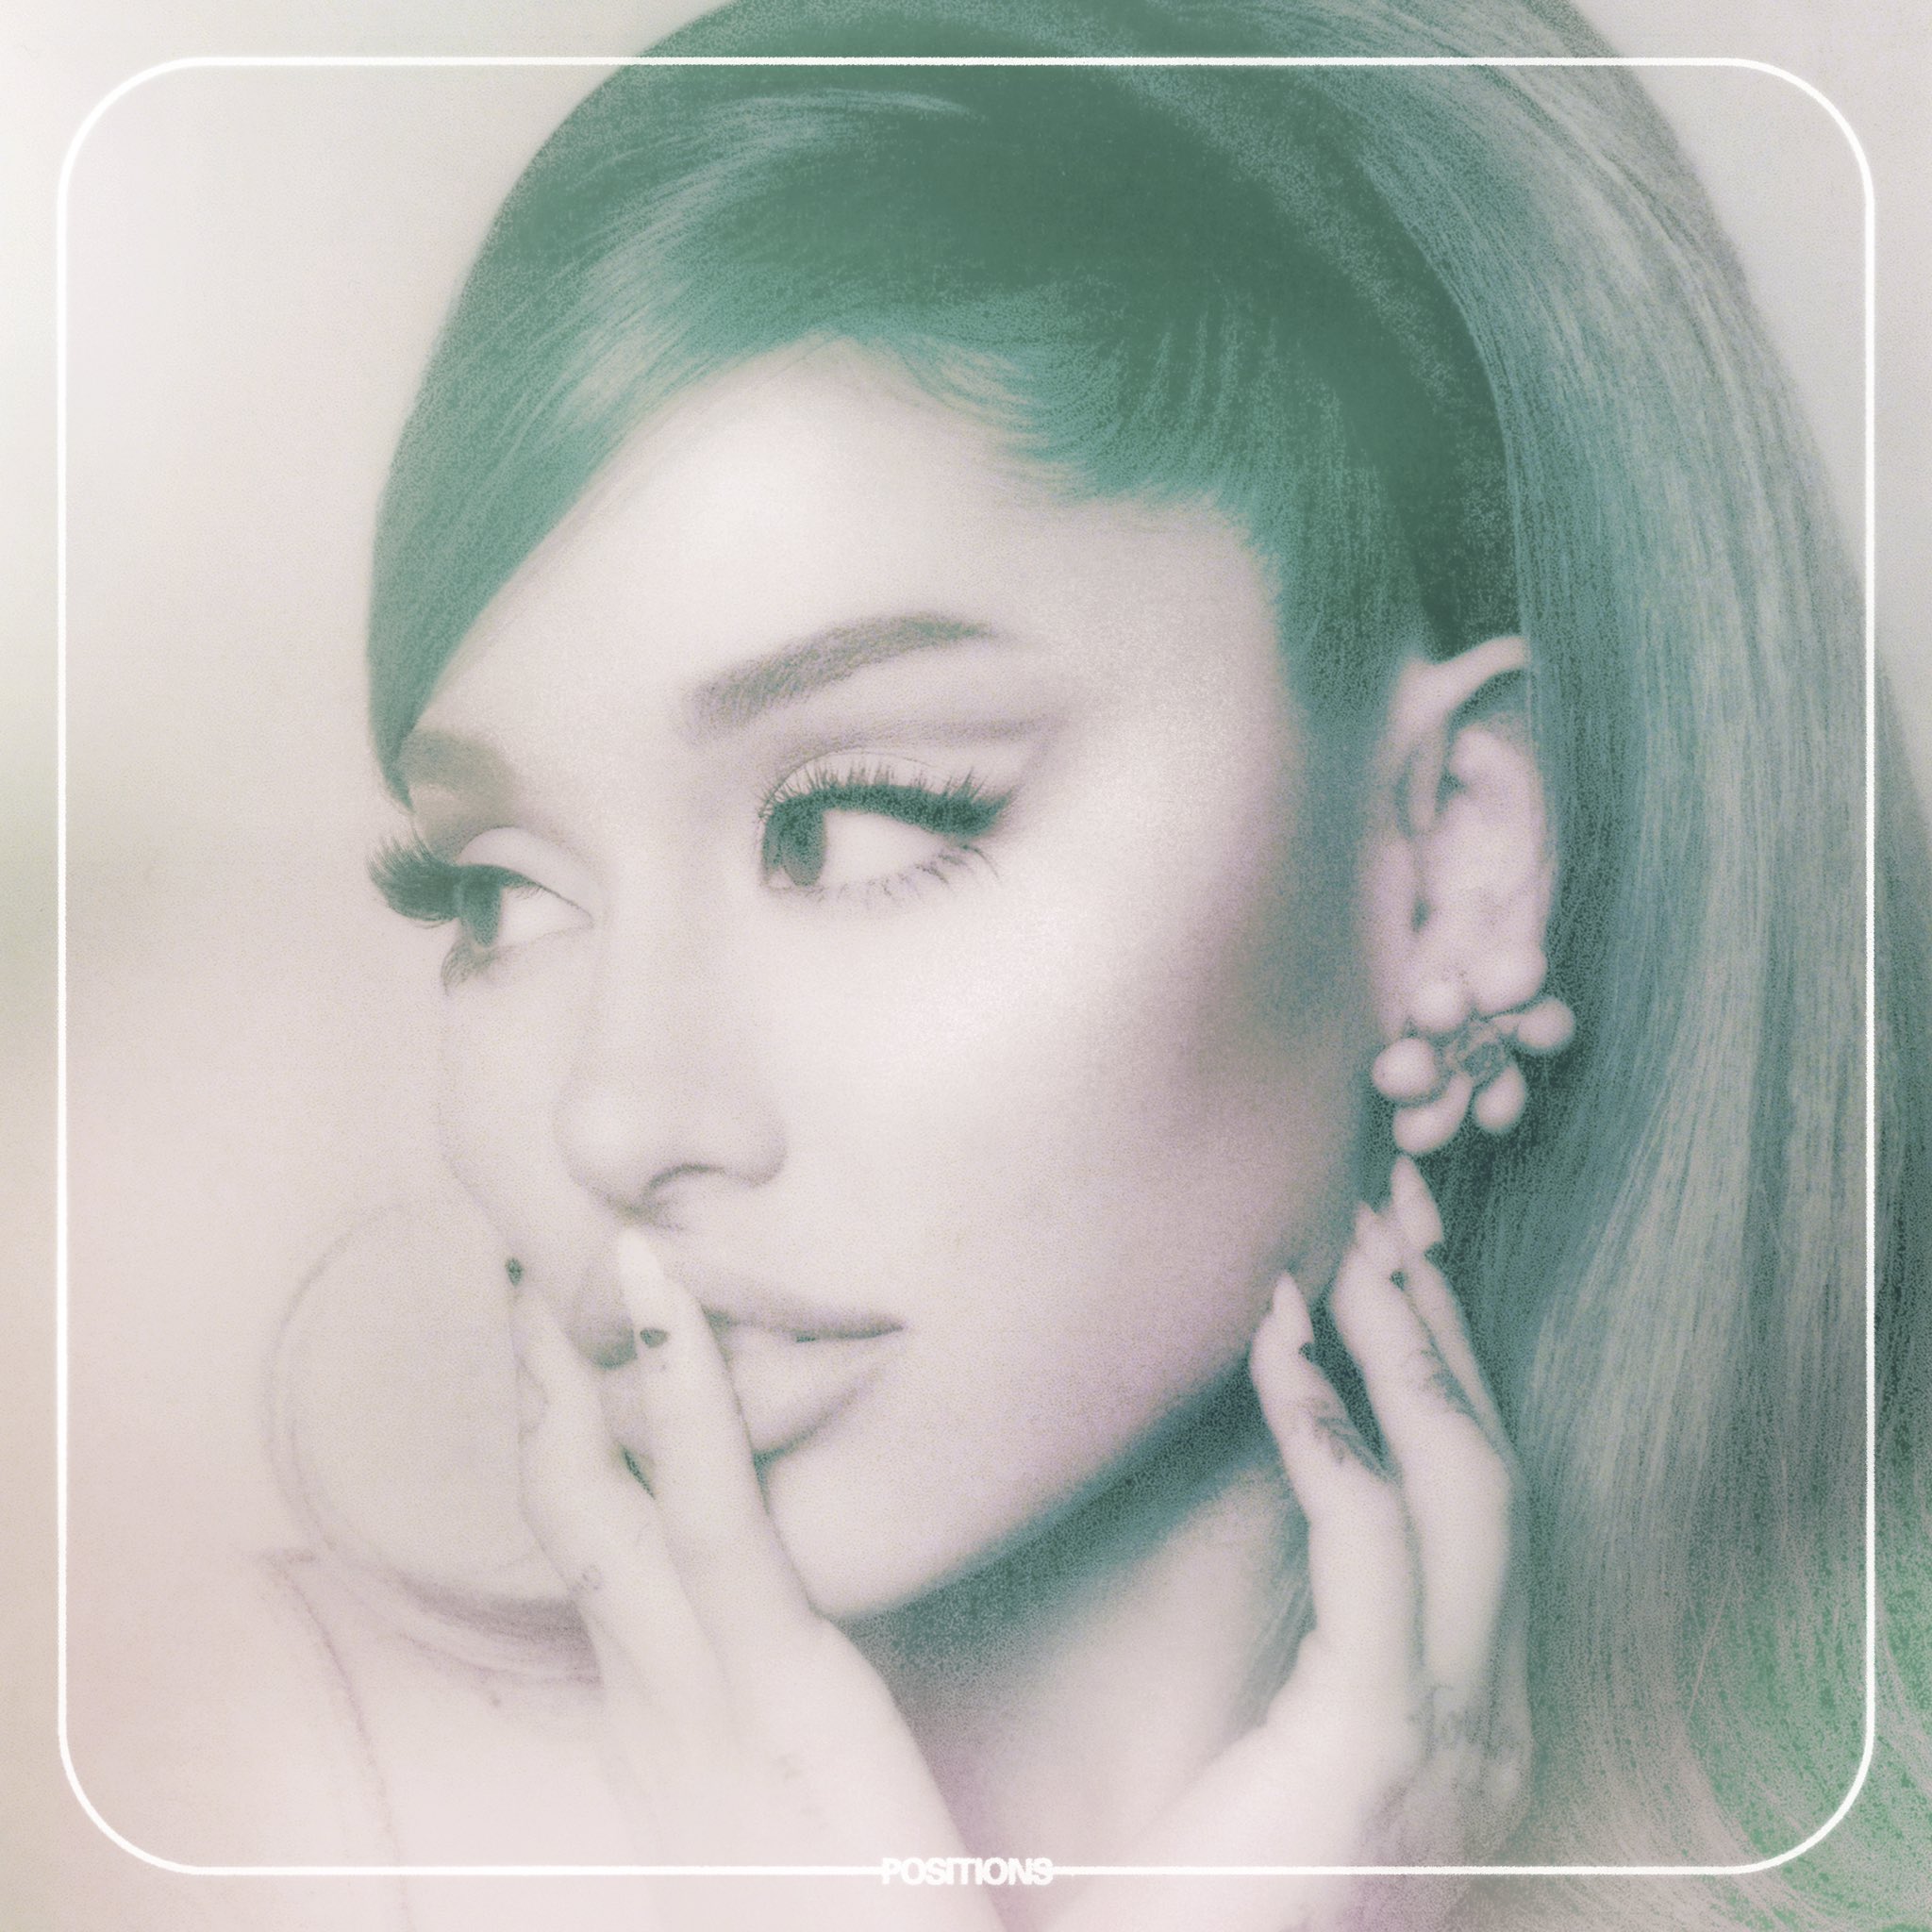 Ariana Grande's New Album 'Positions': Breaking Down the Lyrics